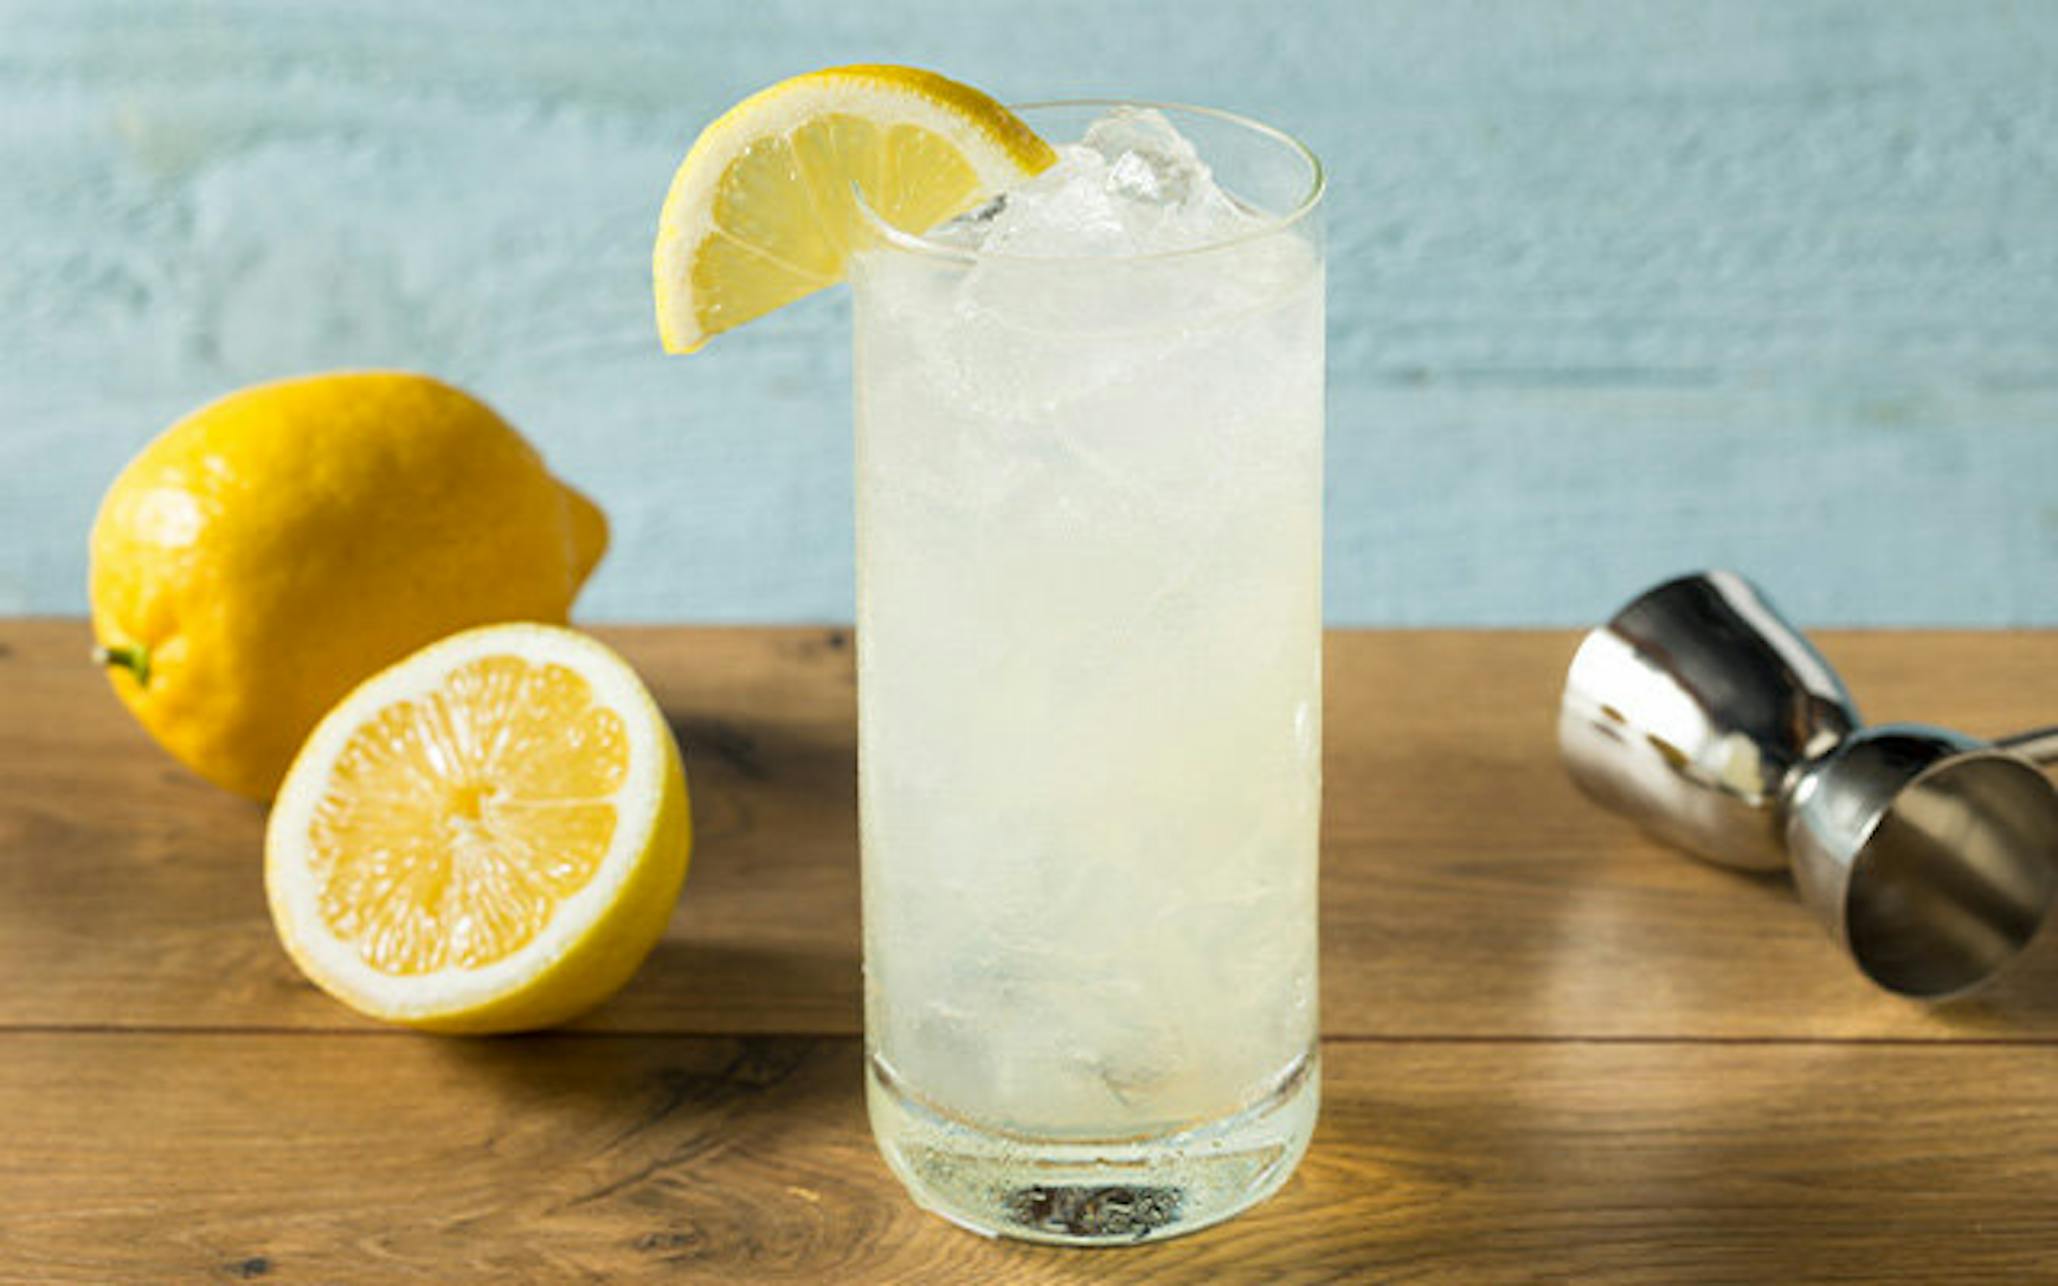 Vanilla Tom Collins cocktail with lemon garnish